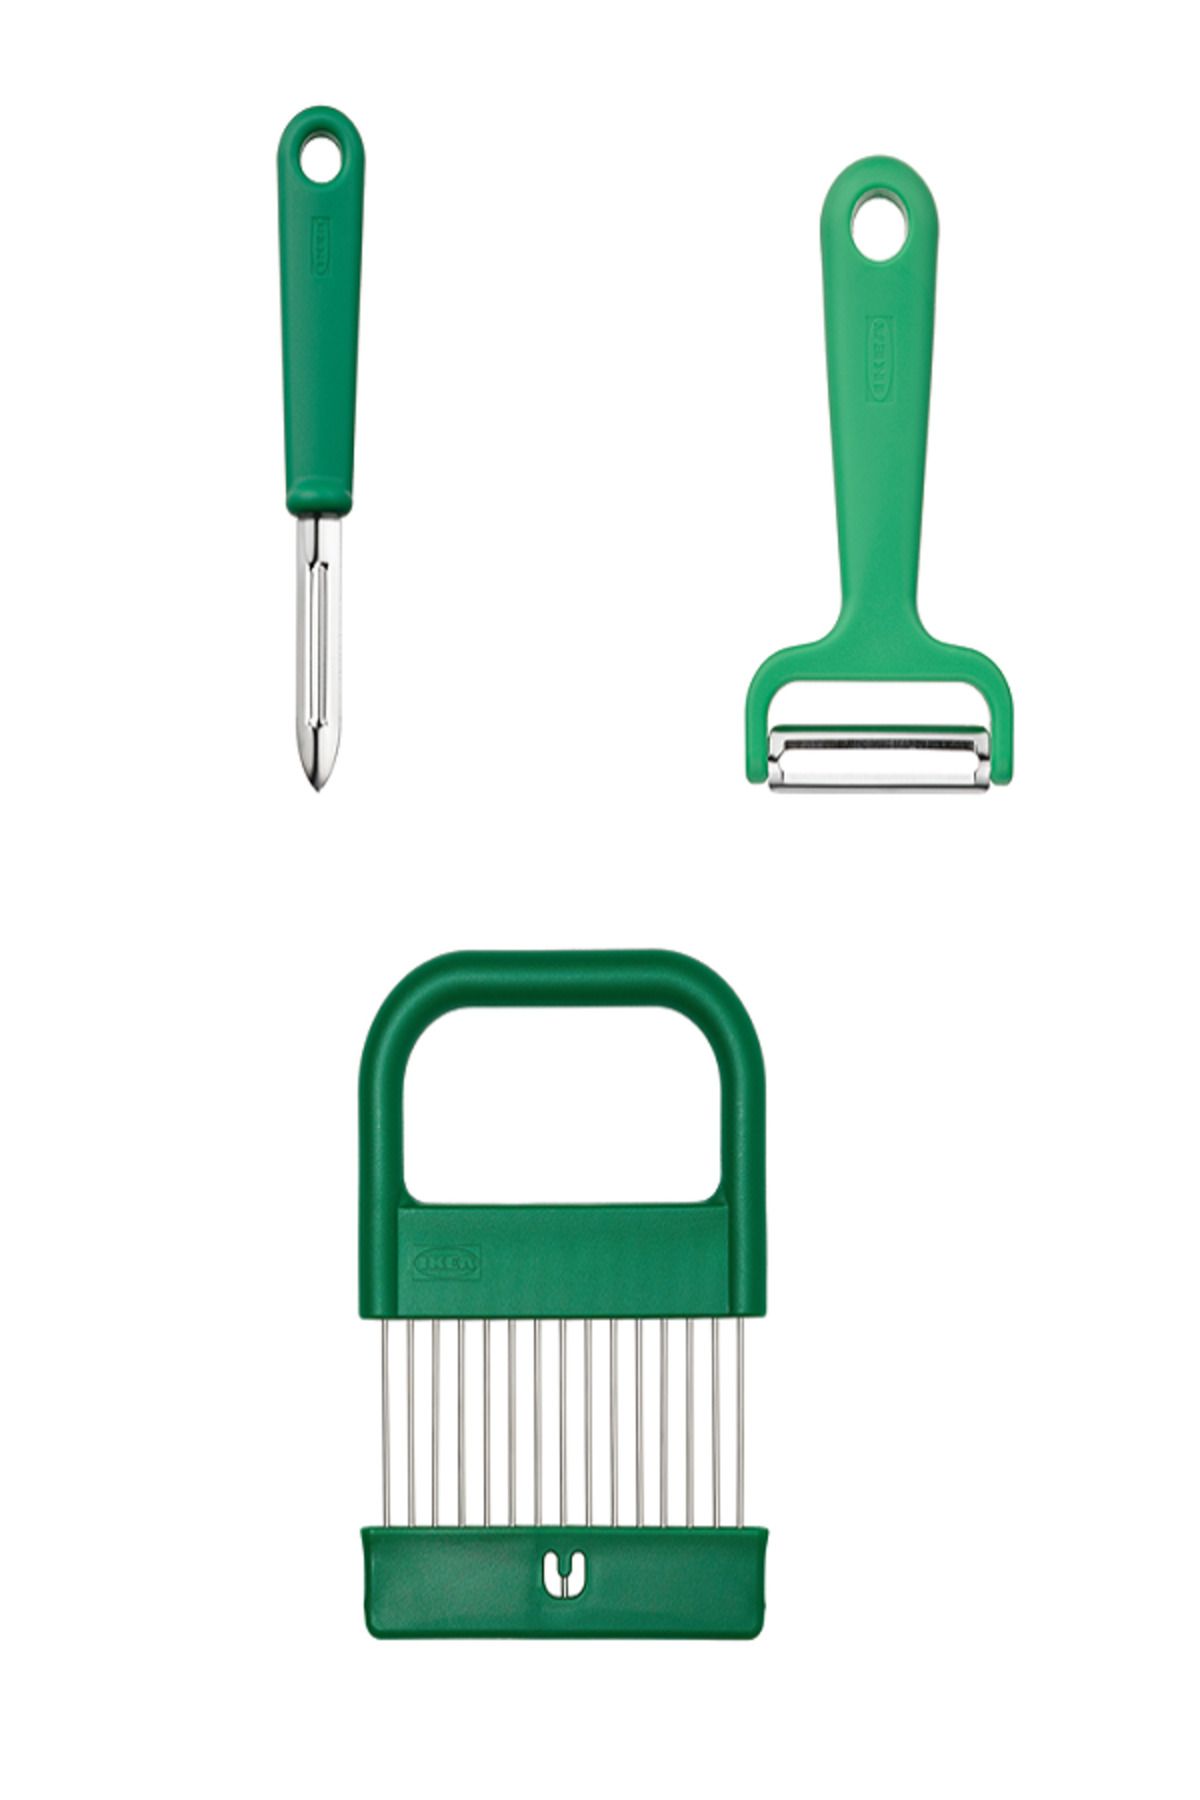 TABBERAS Knife and peeler set of 3, green - IKEA